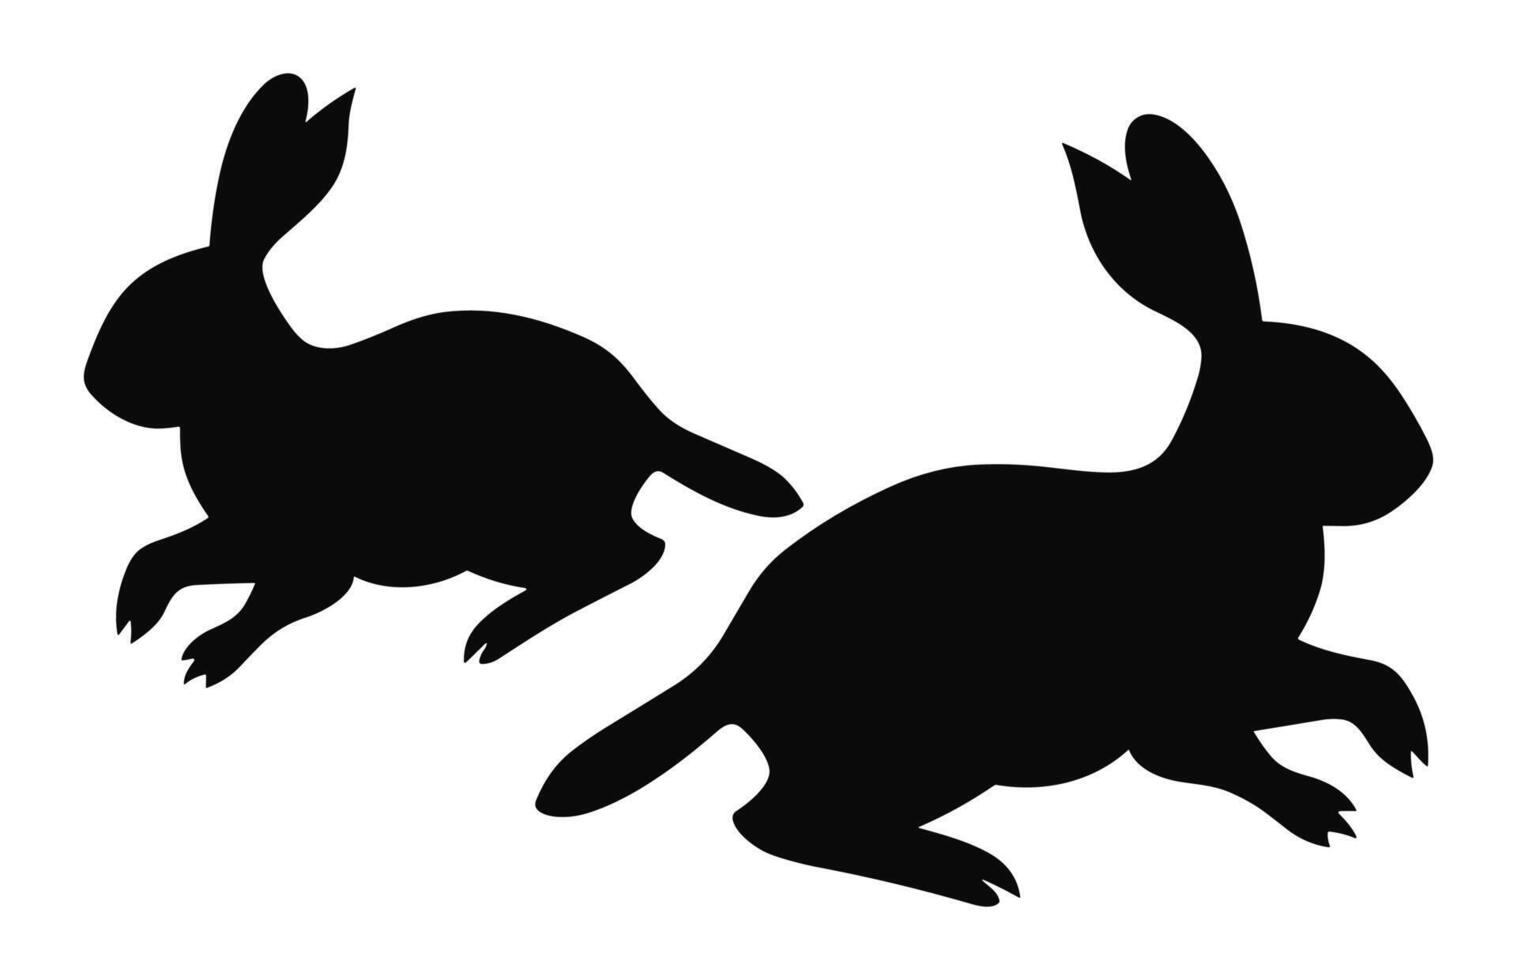 dos Conejo son corriendo silueta vector aislado en un blanco antecedentes